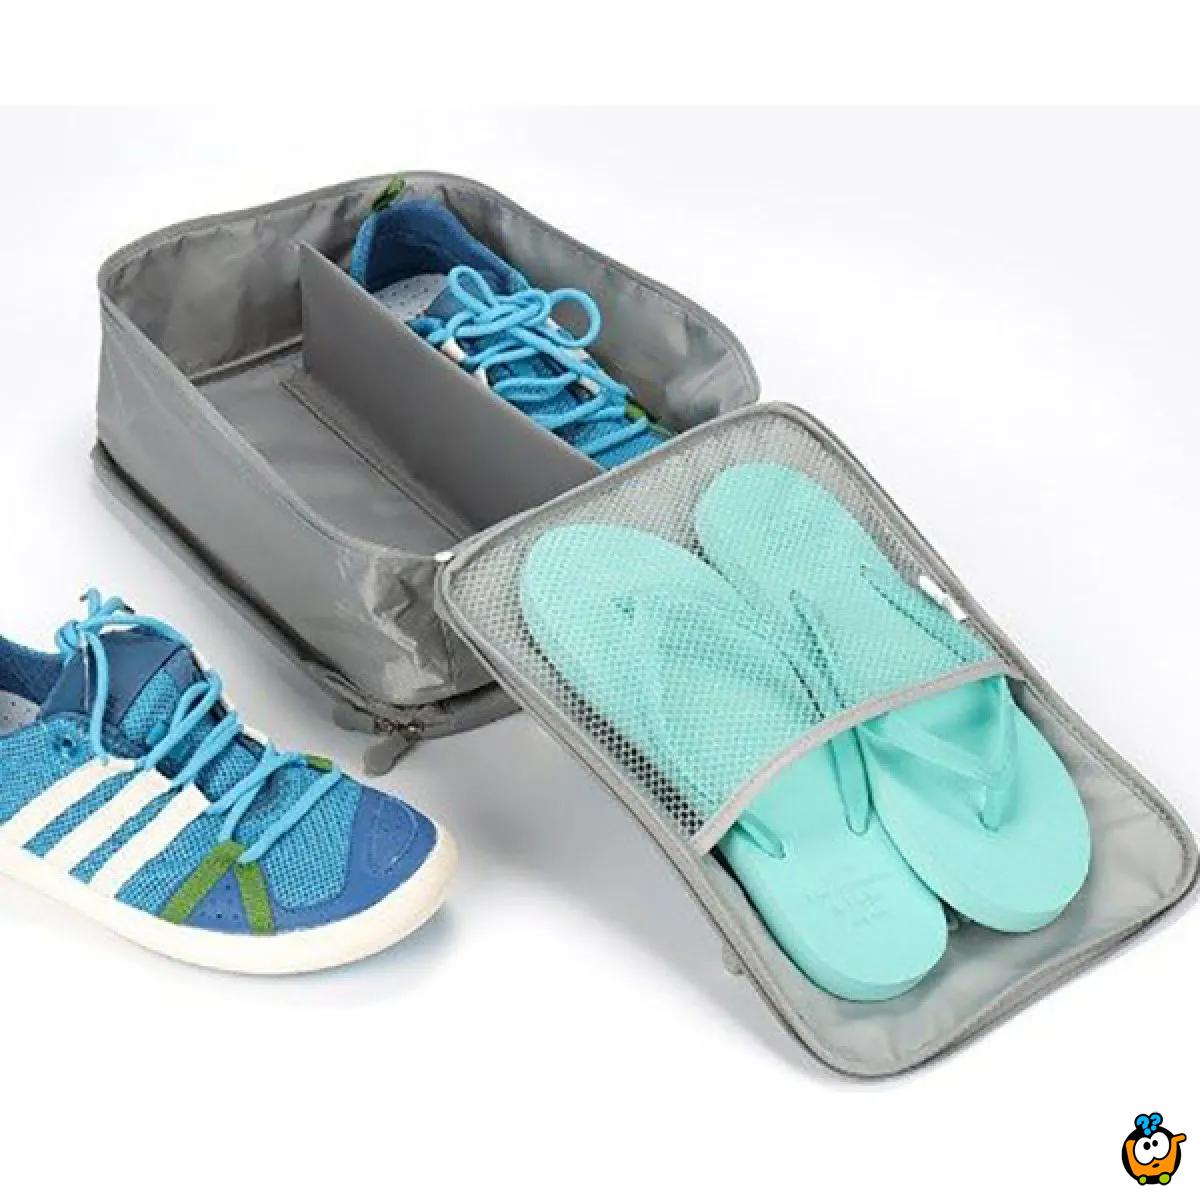 Travel shoes bag - Mala putna torbica za obuću i ostale stvari